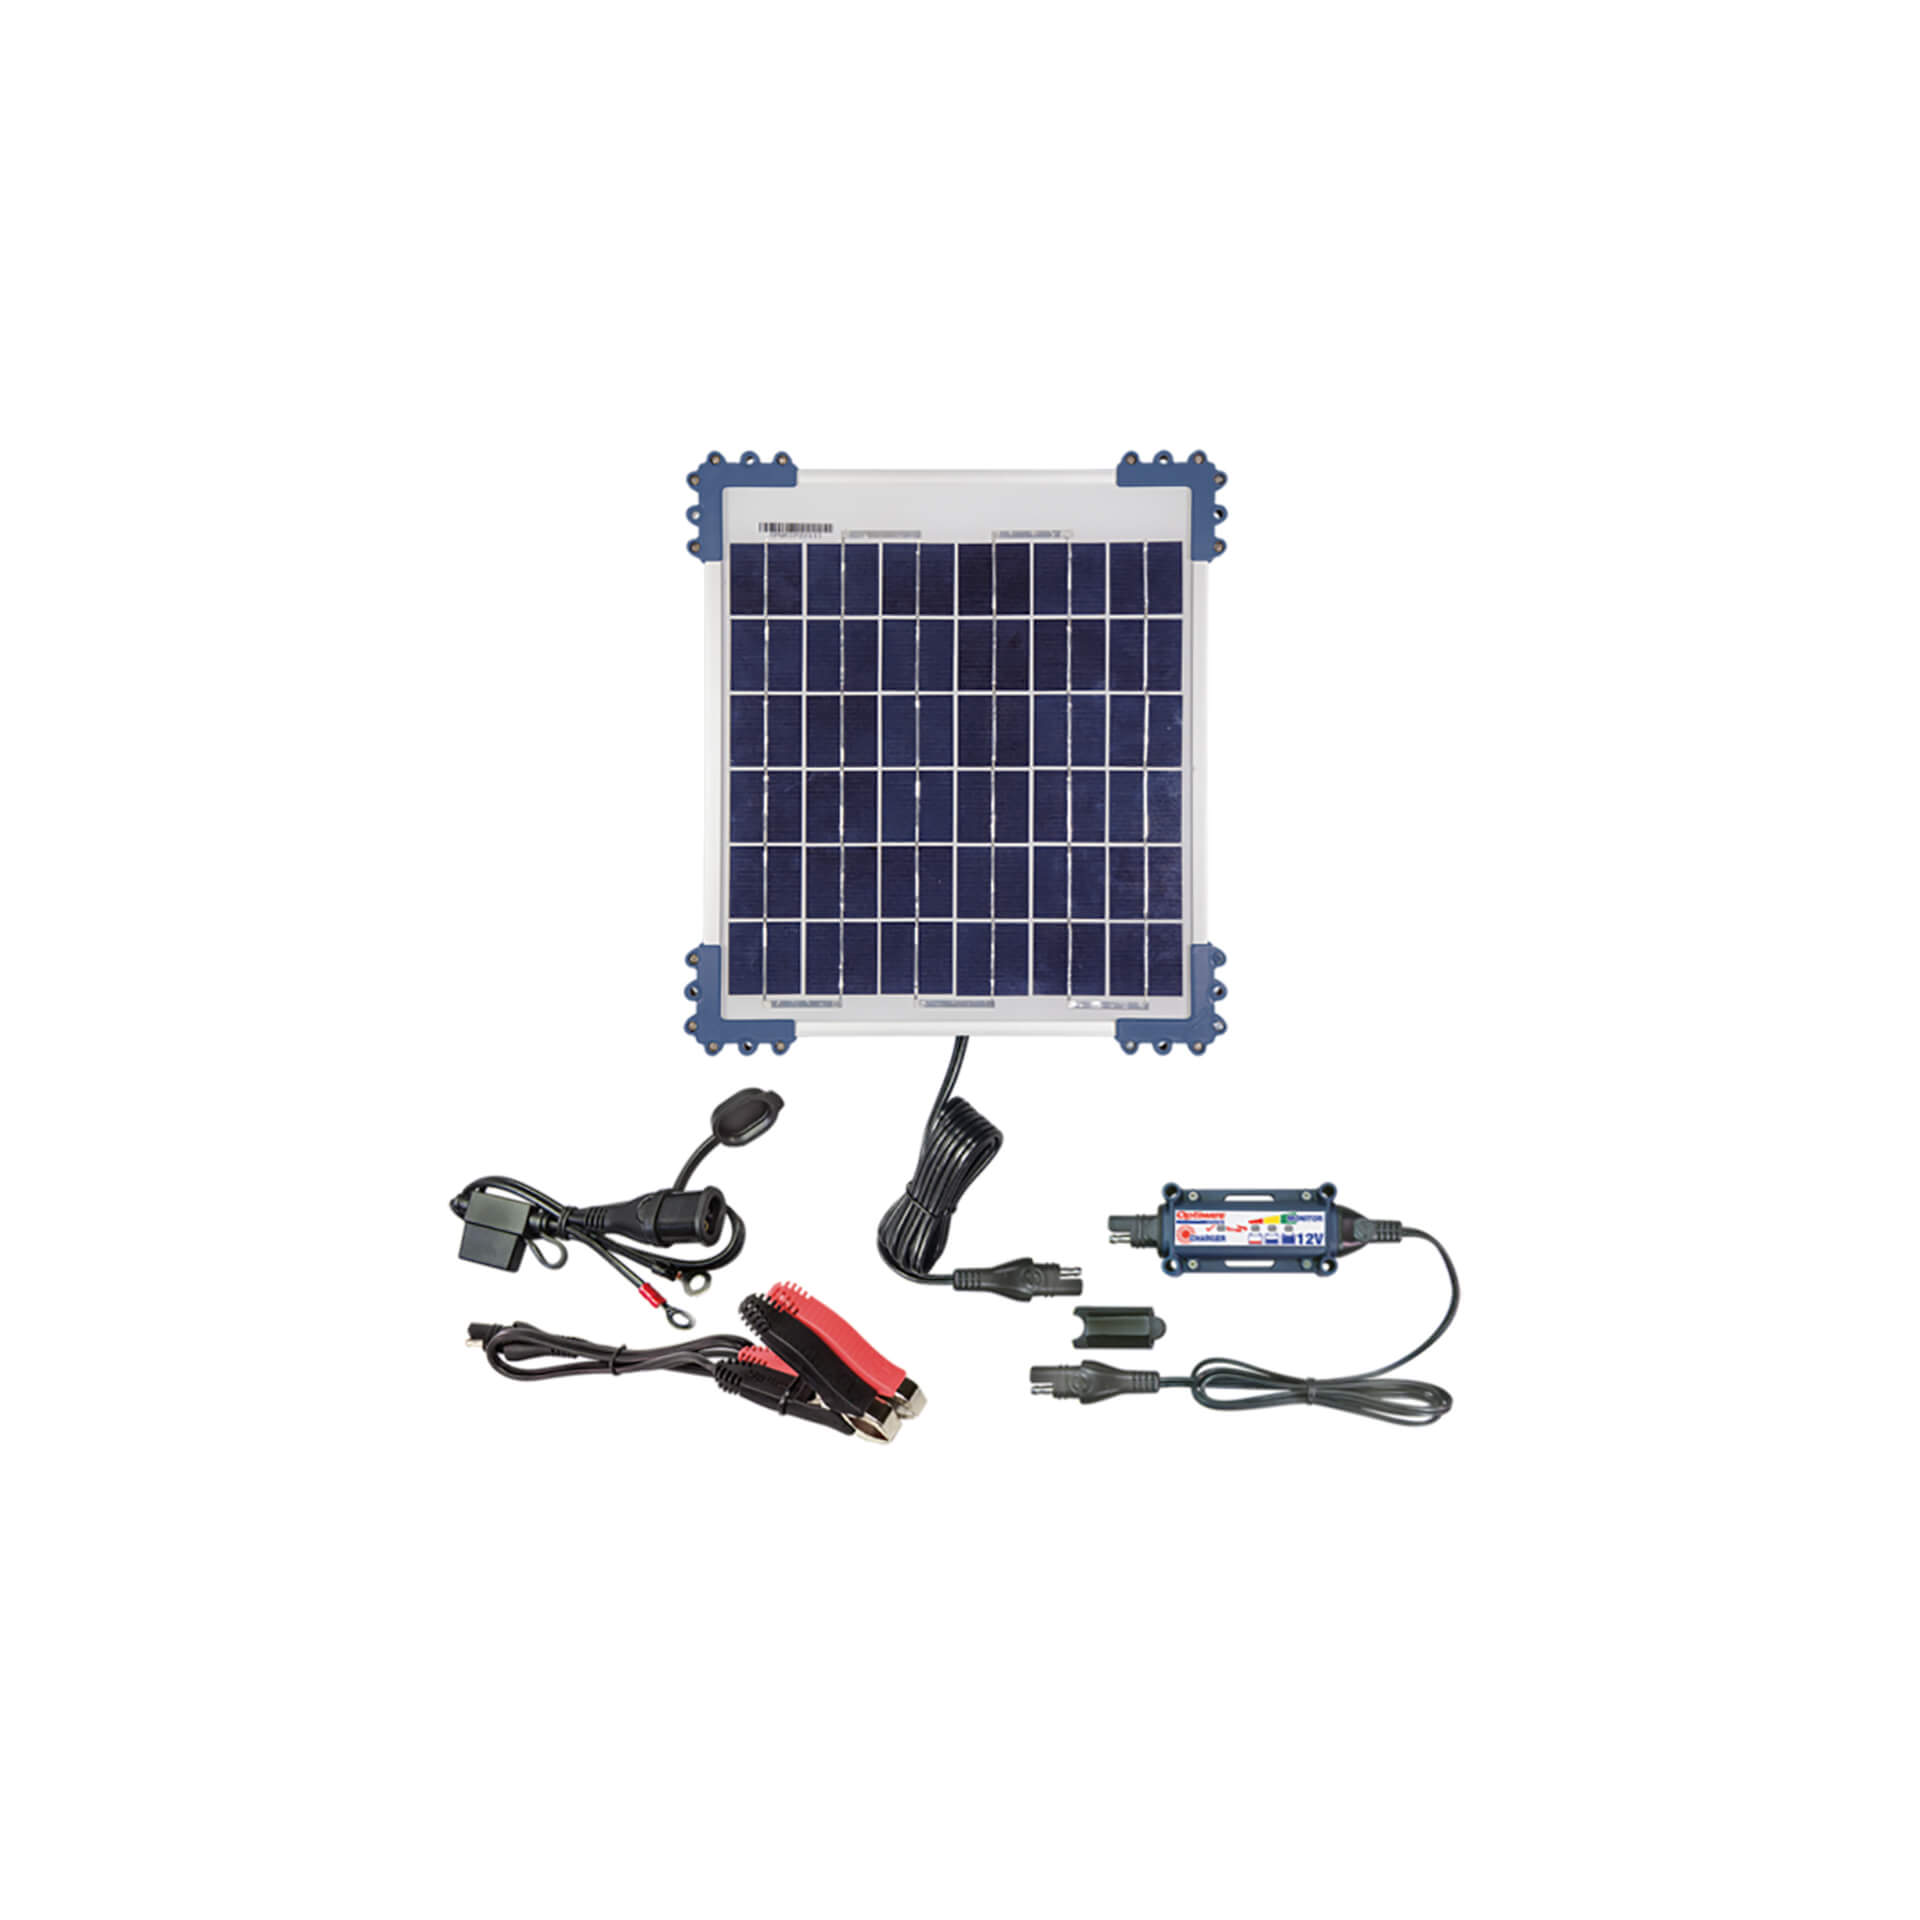 optimate Solar DUO Ladegerät 10 Watt für Blei/GEL/AGM/LFP